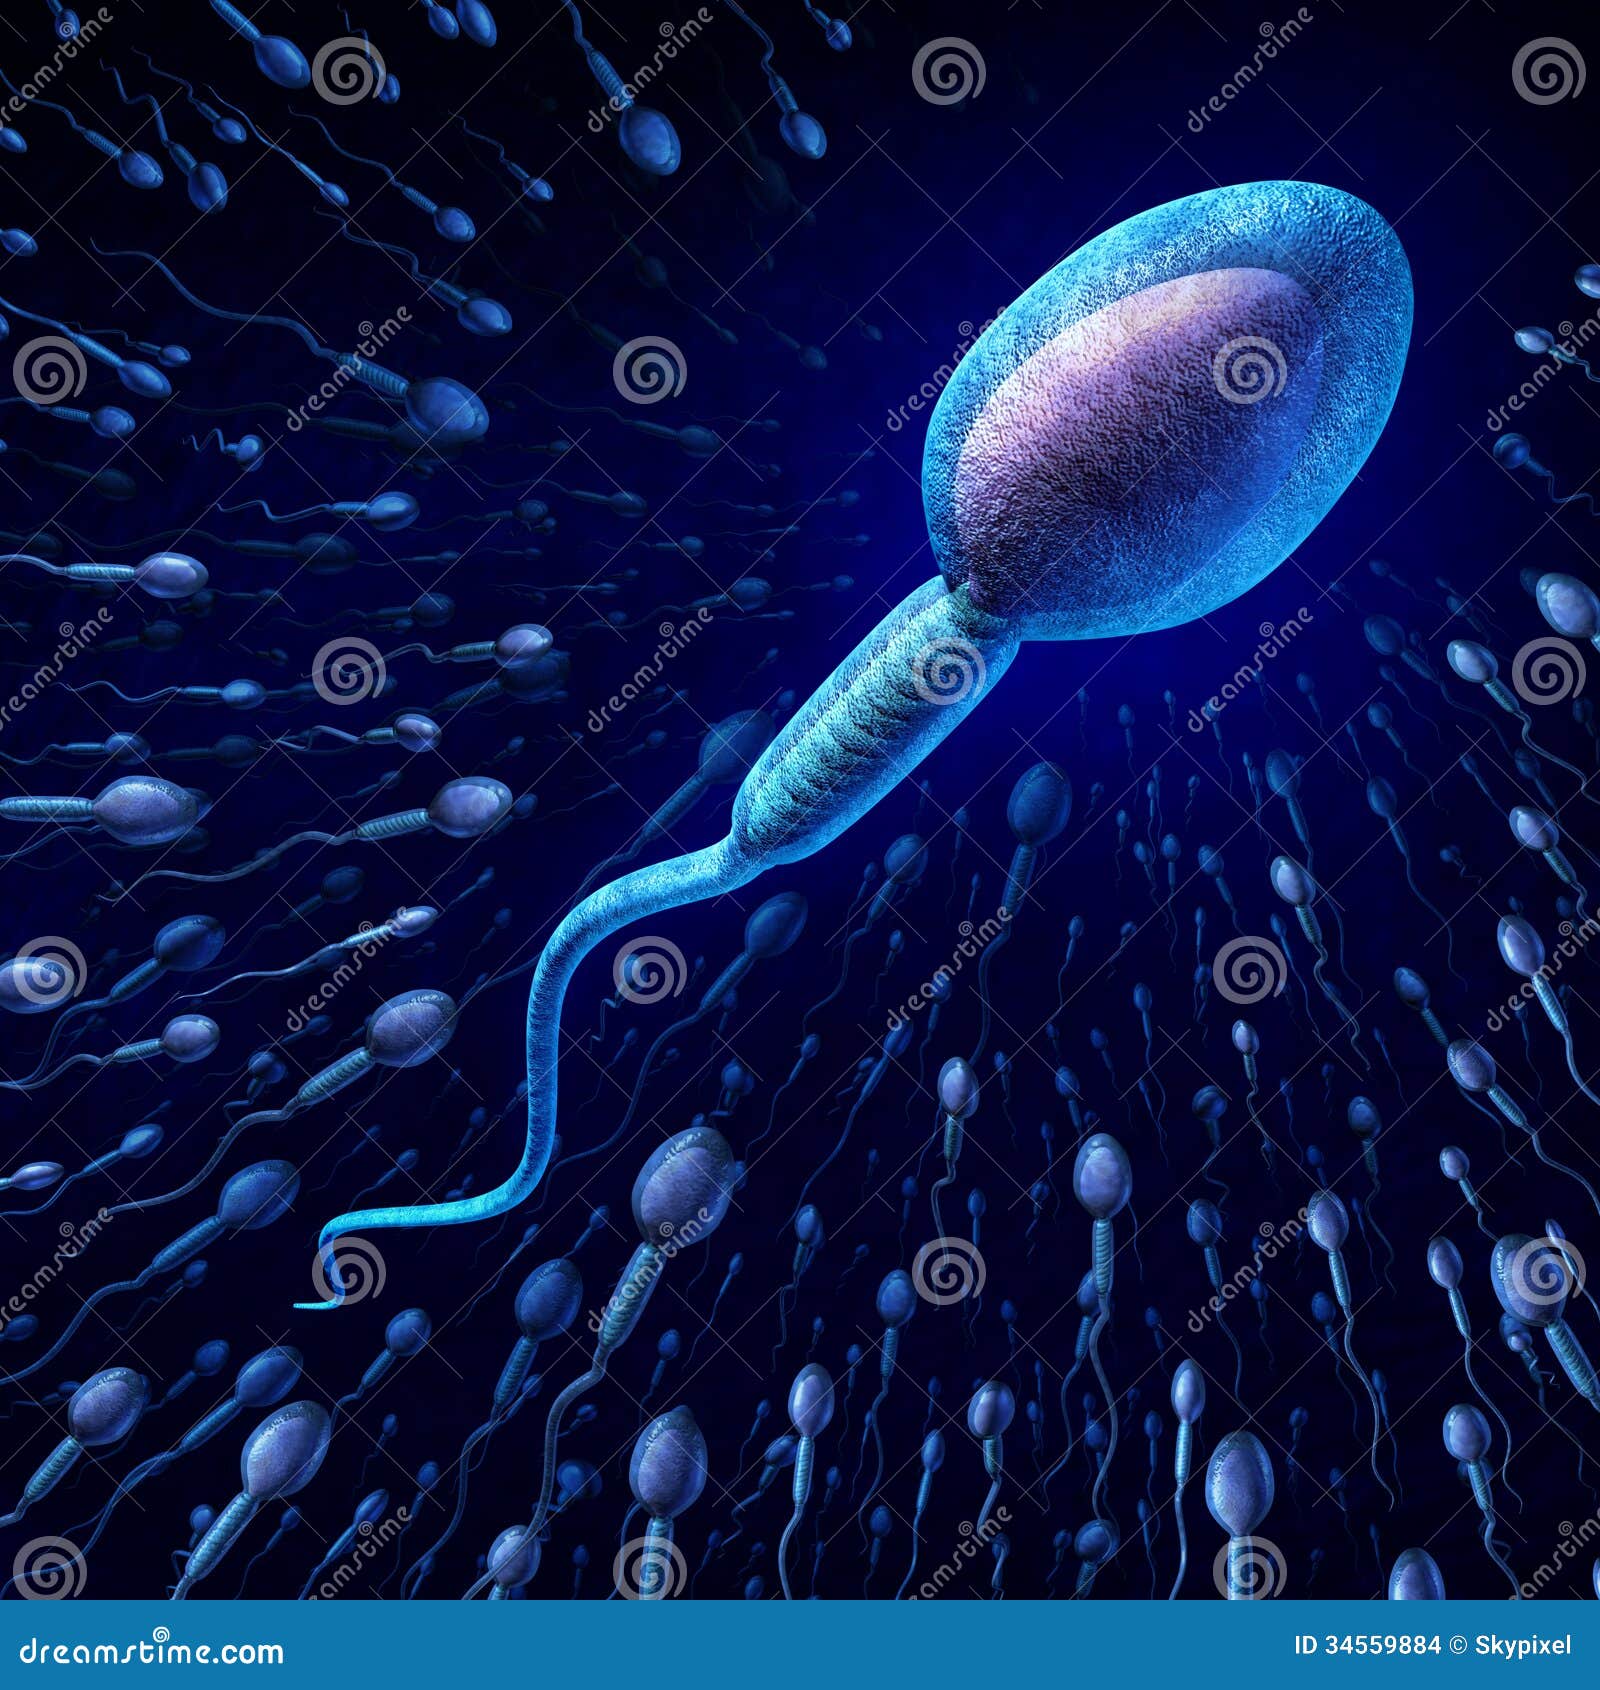 Sperm And Egg Cell Natural Fertilization 3d Illustration On Red Background